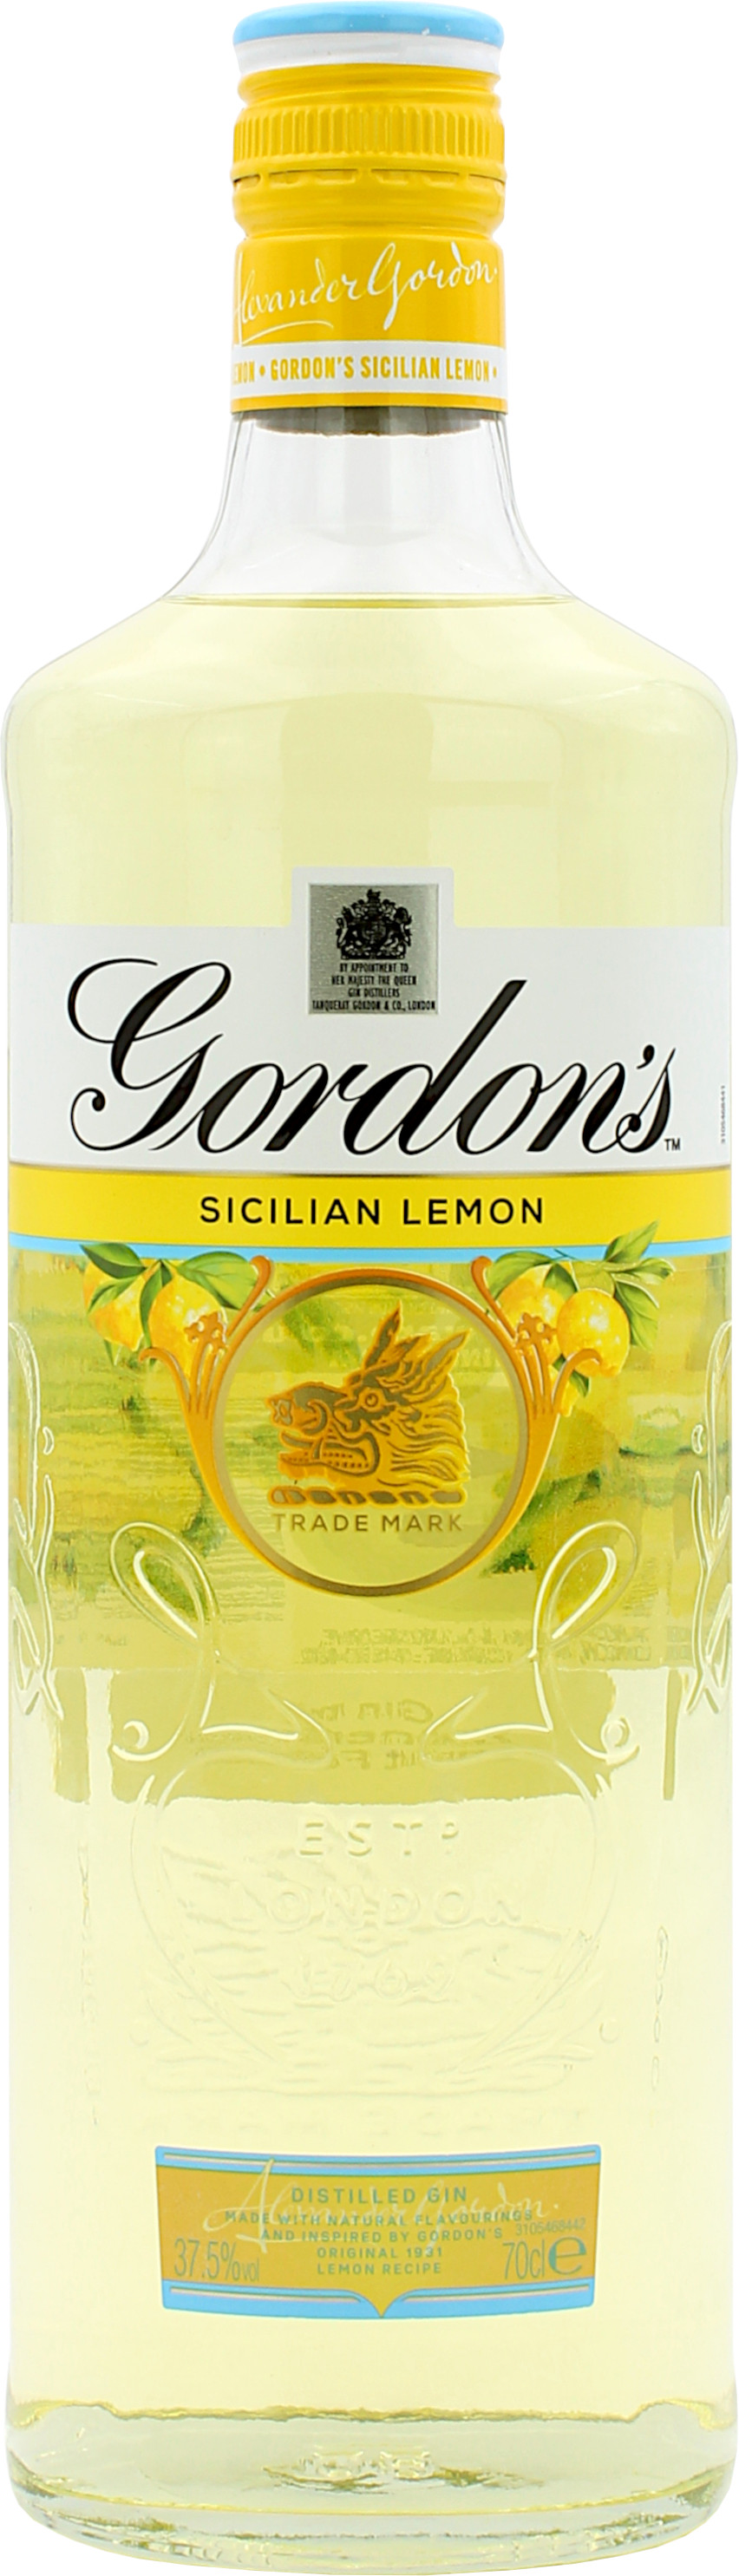 Gordon's Sicilian Lemon Gin 37.5% 0,7l